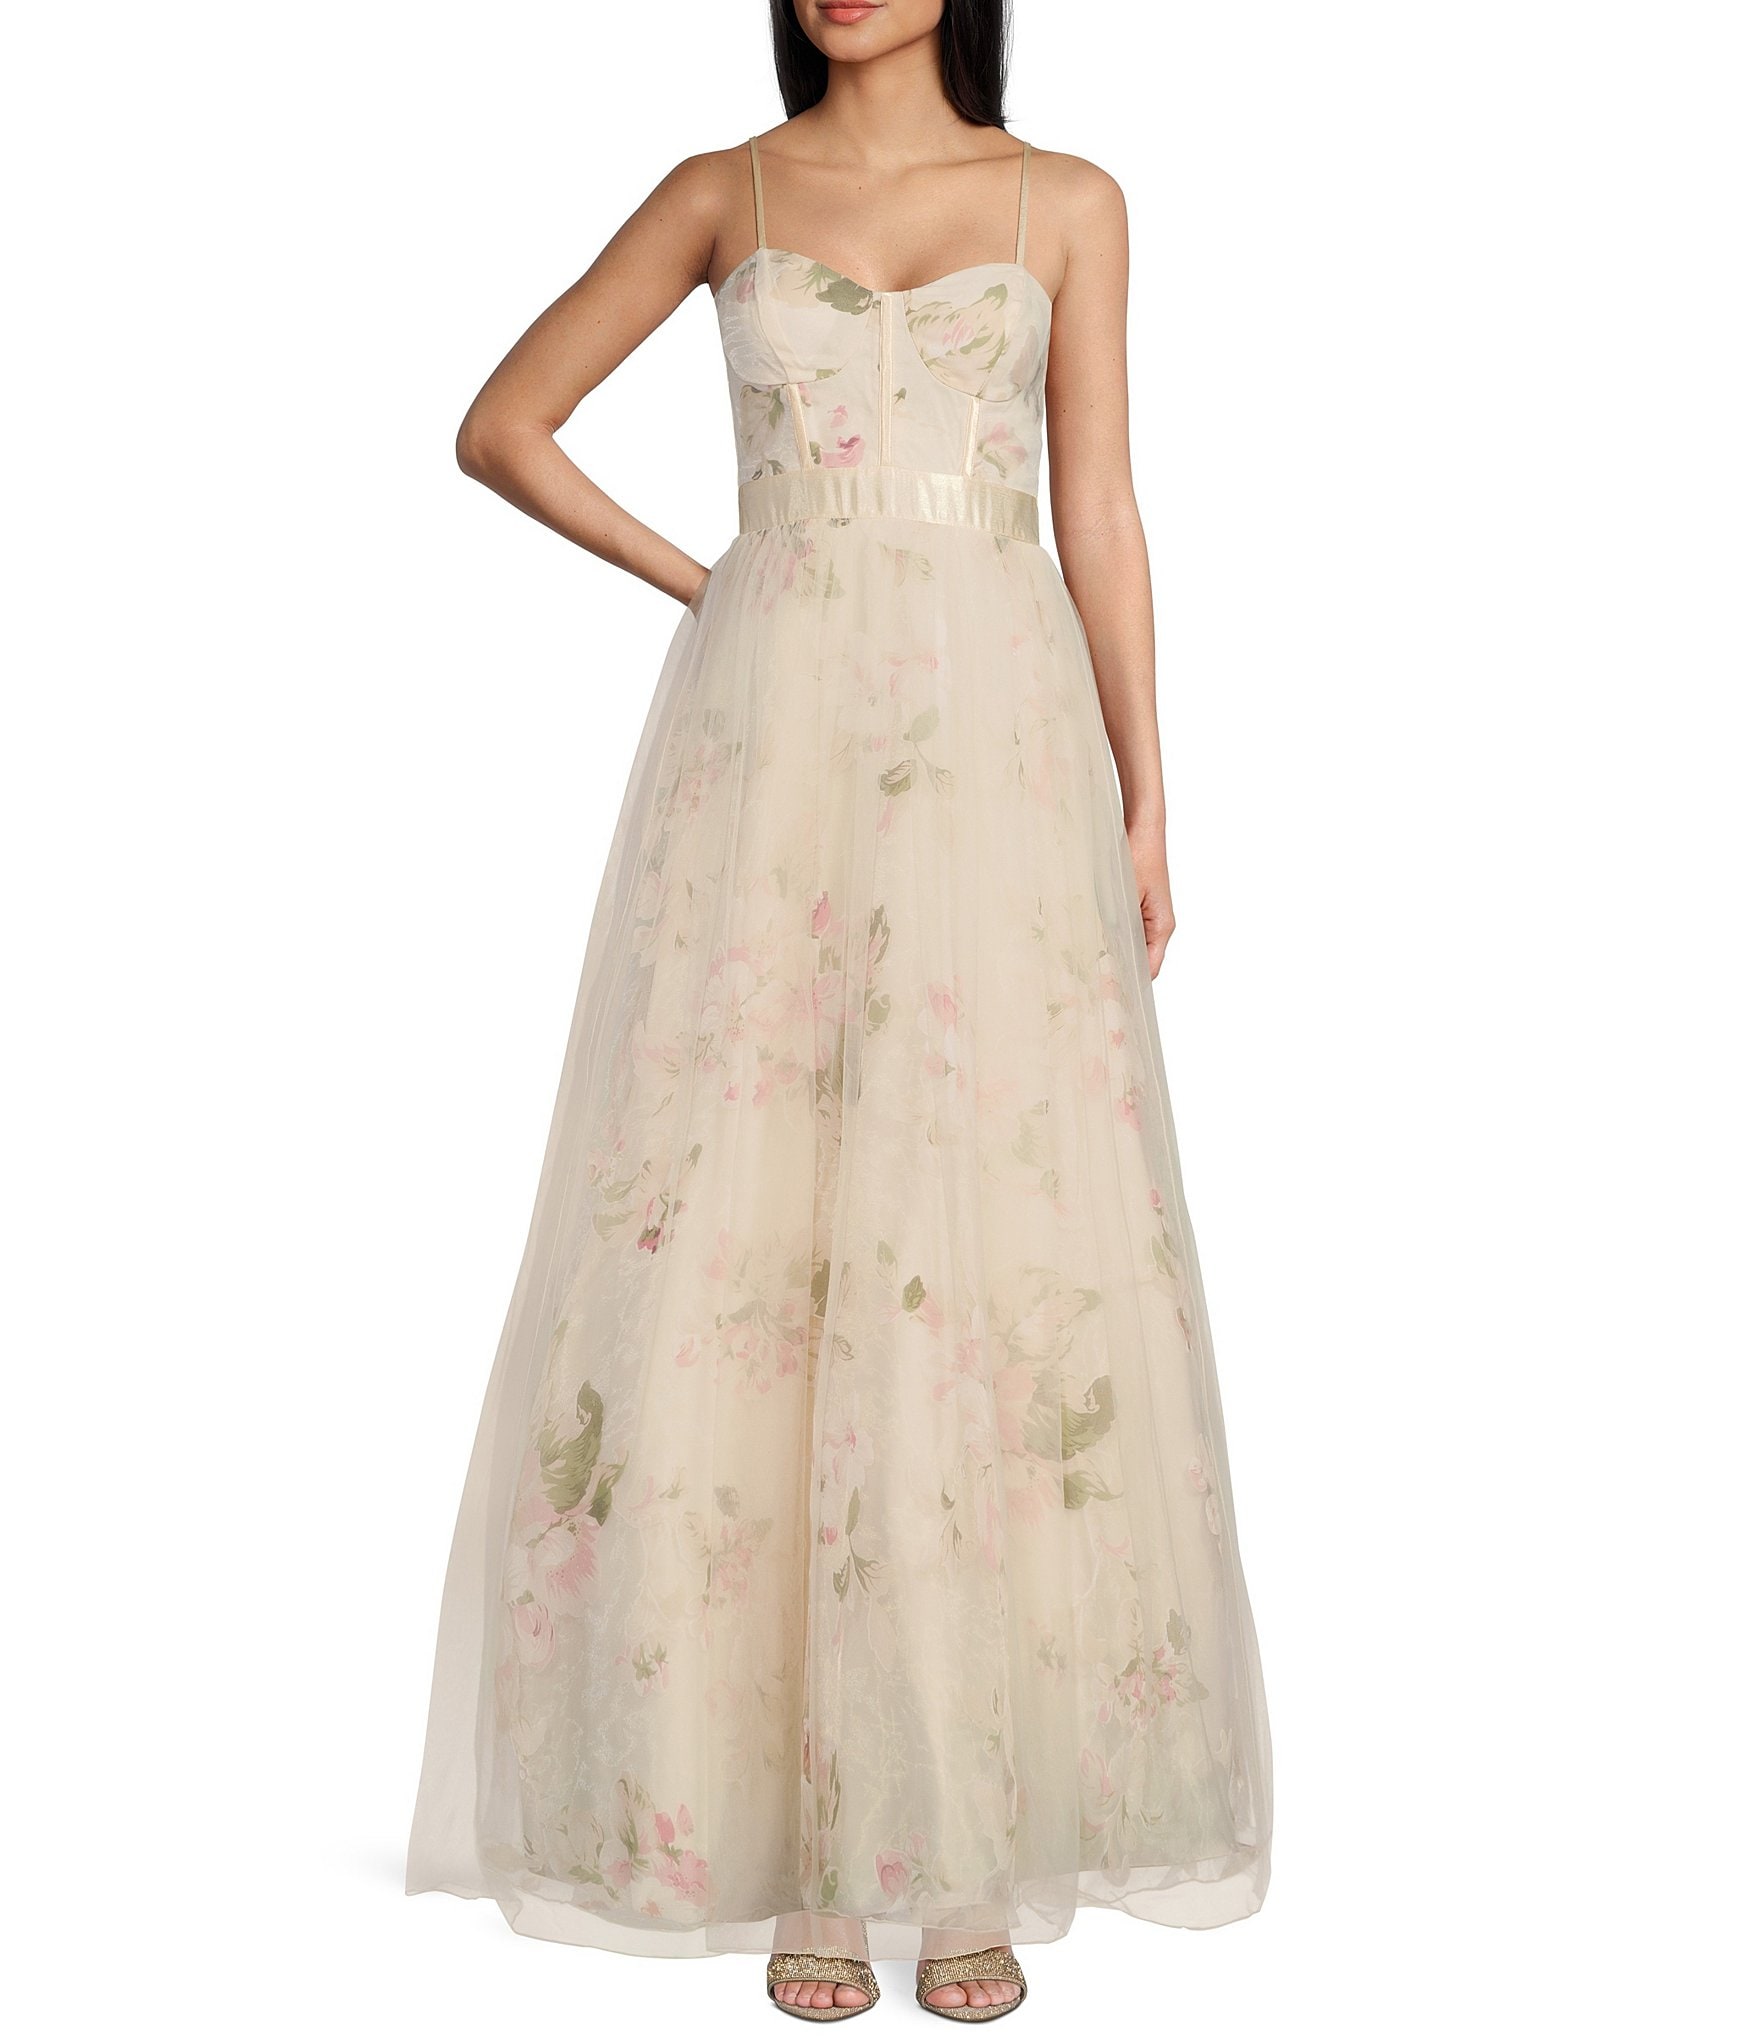 Sale & Clearance Pink Women's Formal Dresses & Evening Gowns | Dillard's